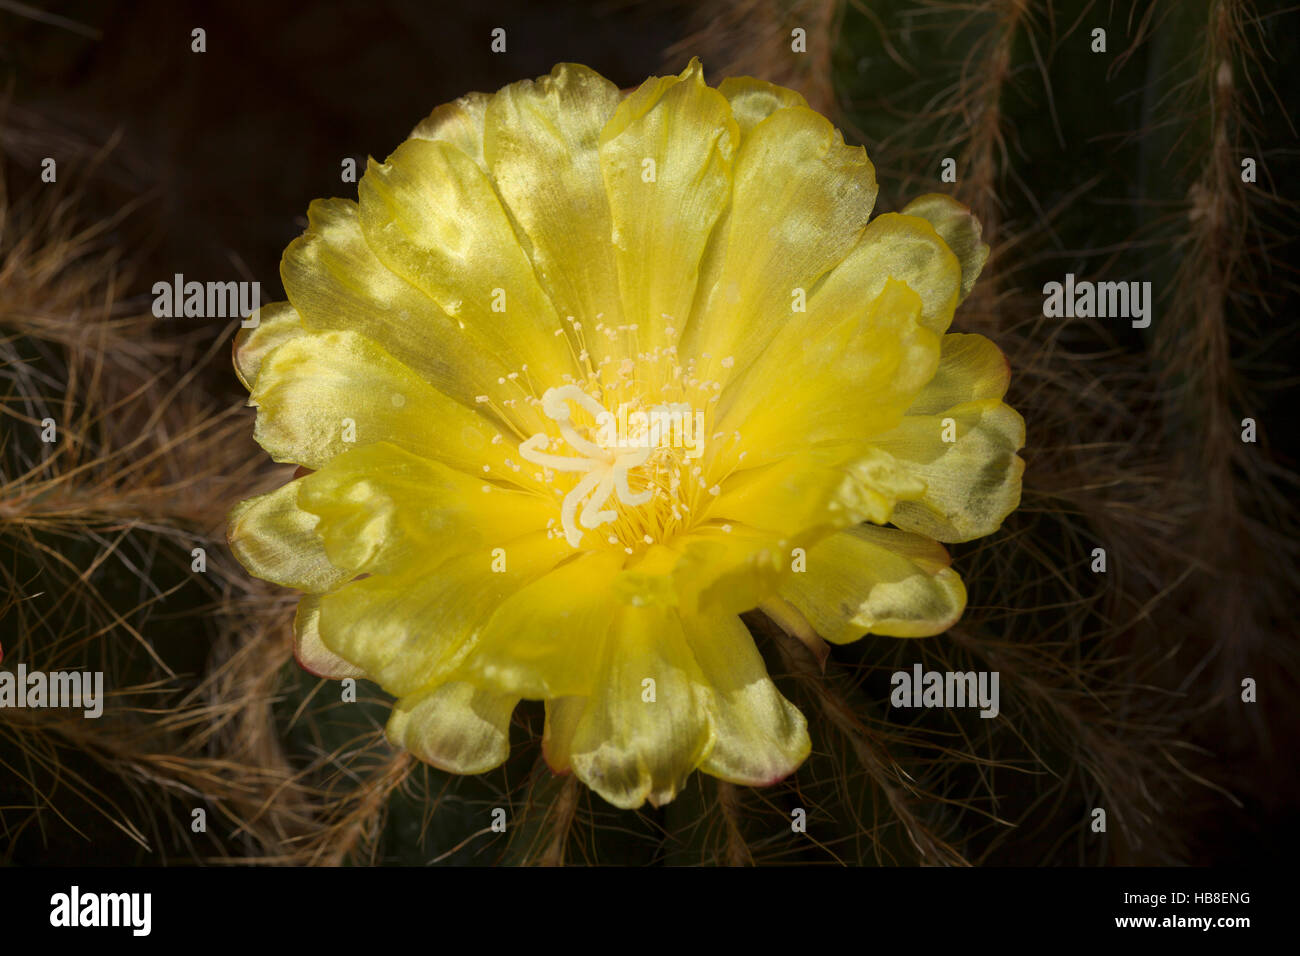 Yellow cactus flower, (Parodia magnifica) Stock Photo